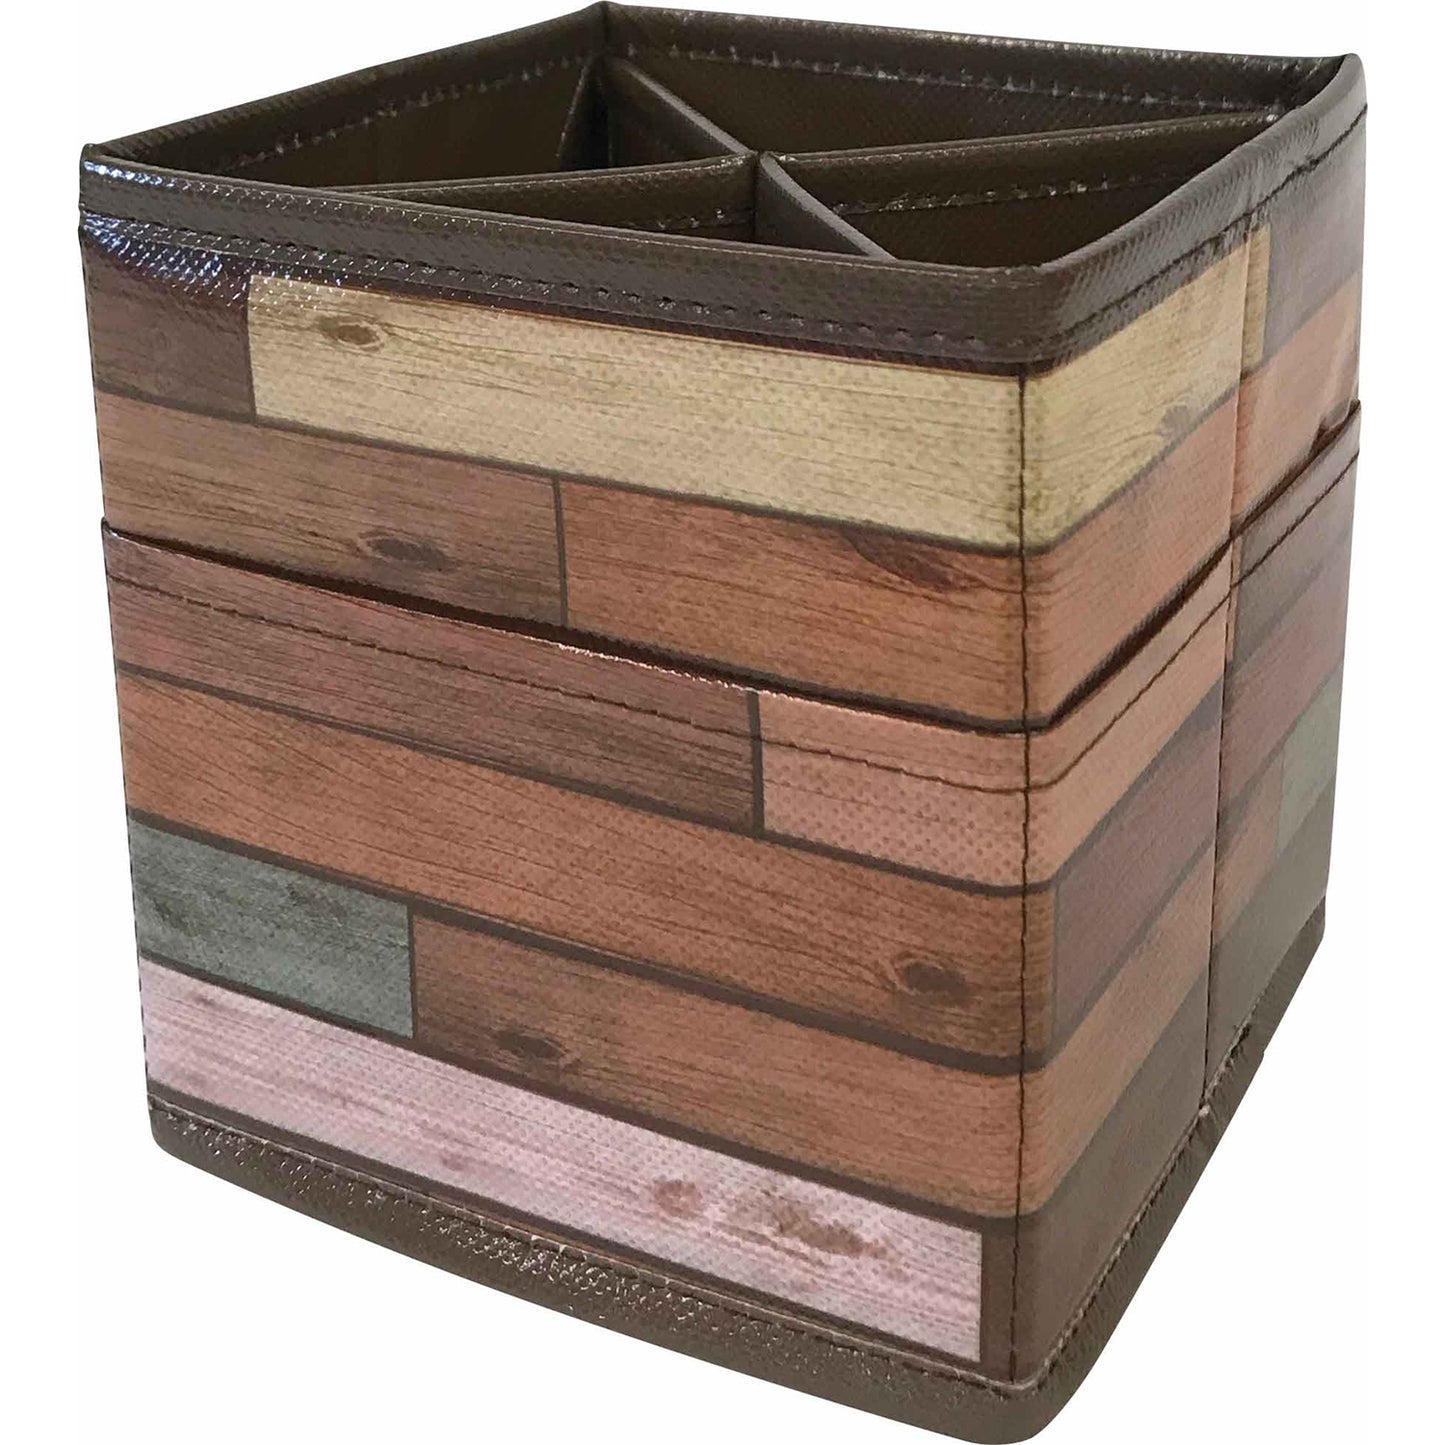 Reclaimed Wood Design Desktop Organizer, Pack of 2